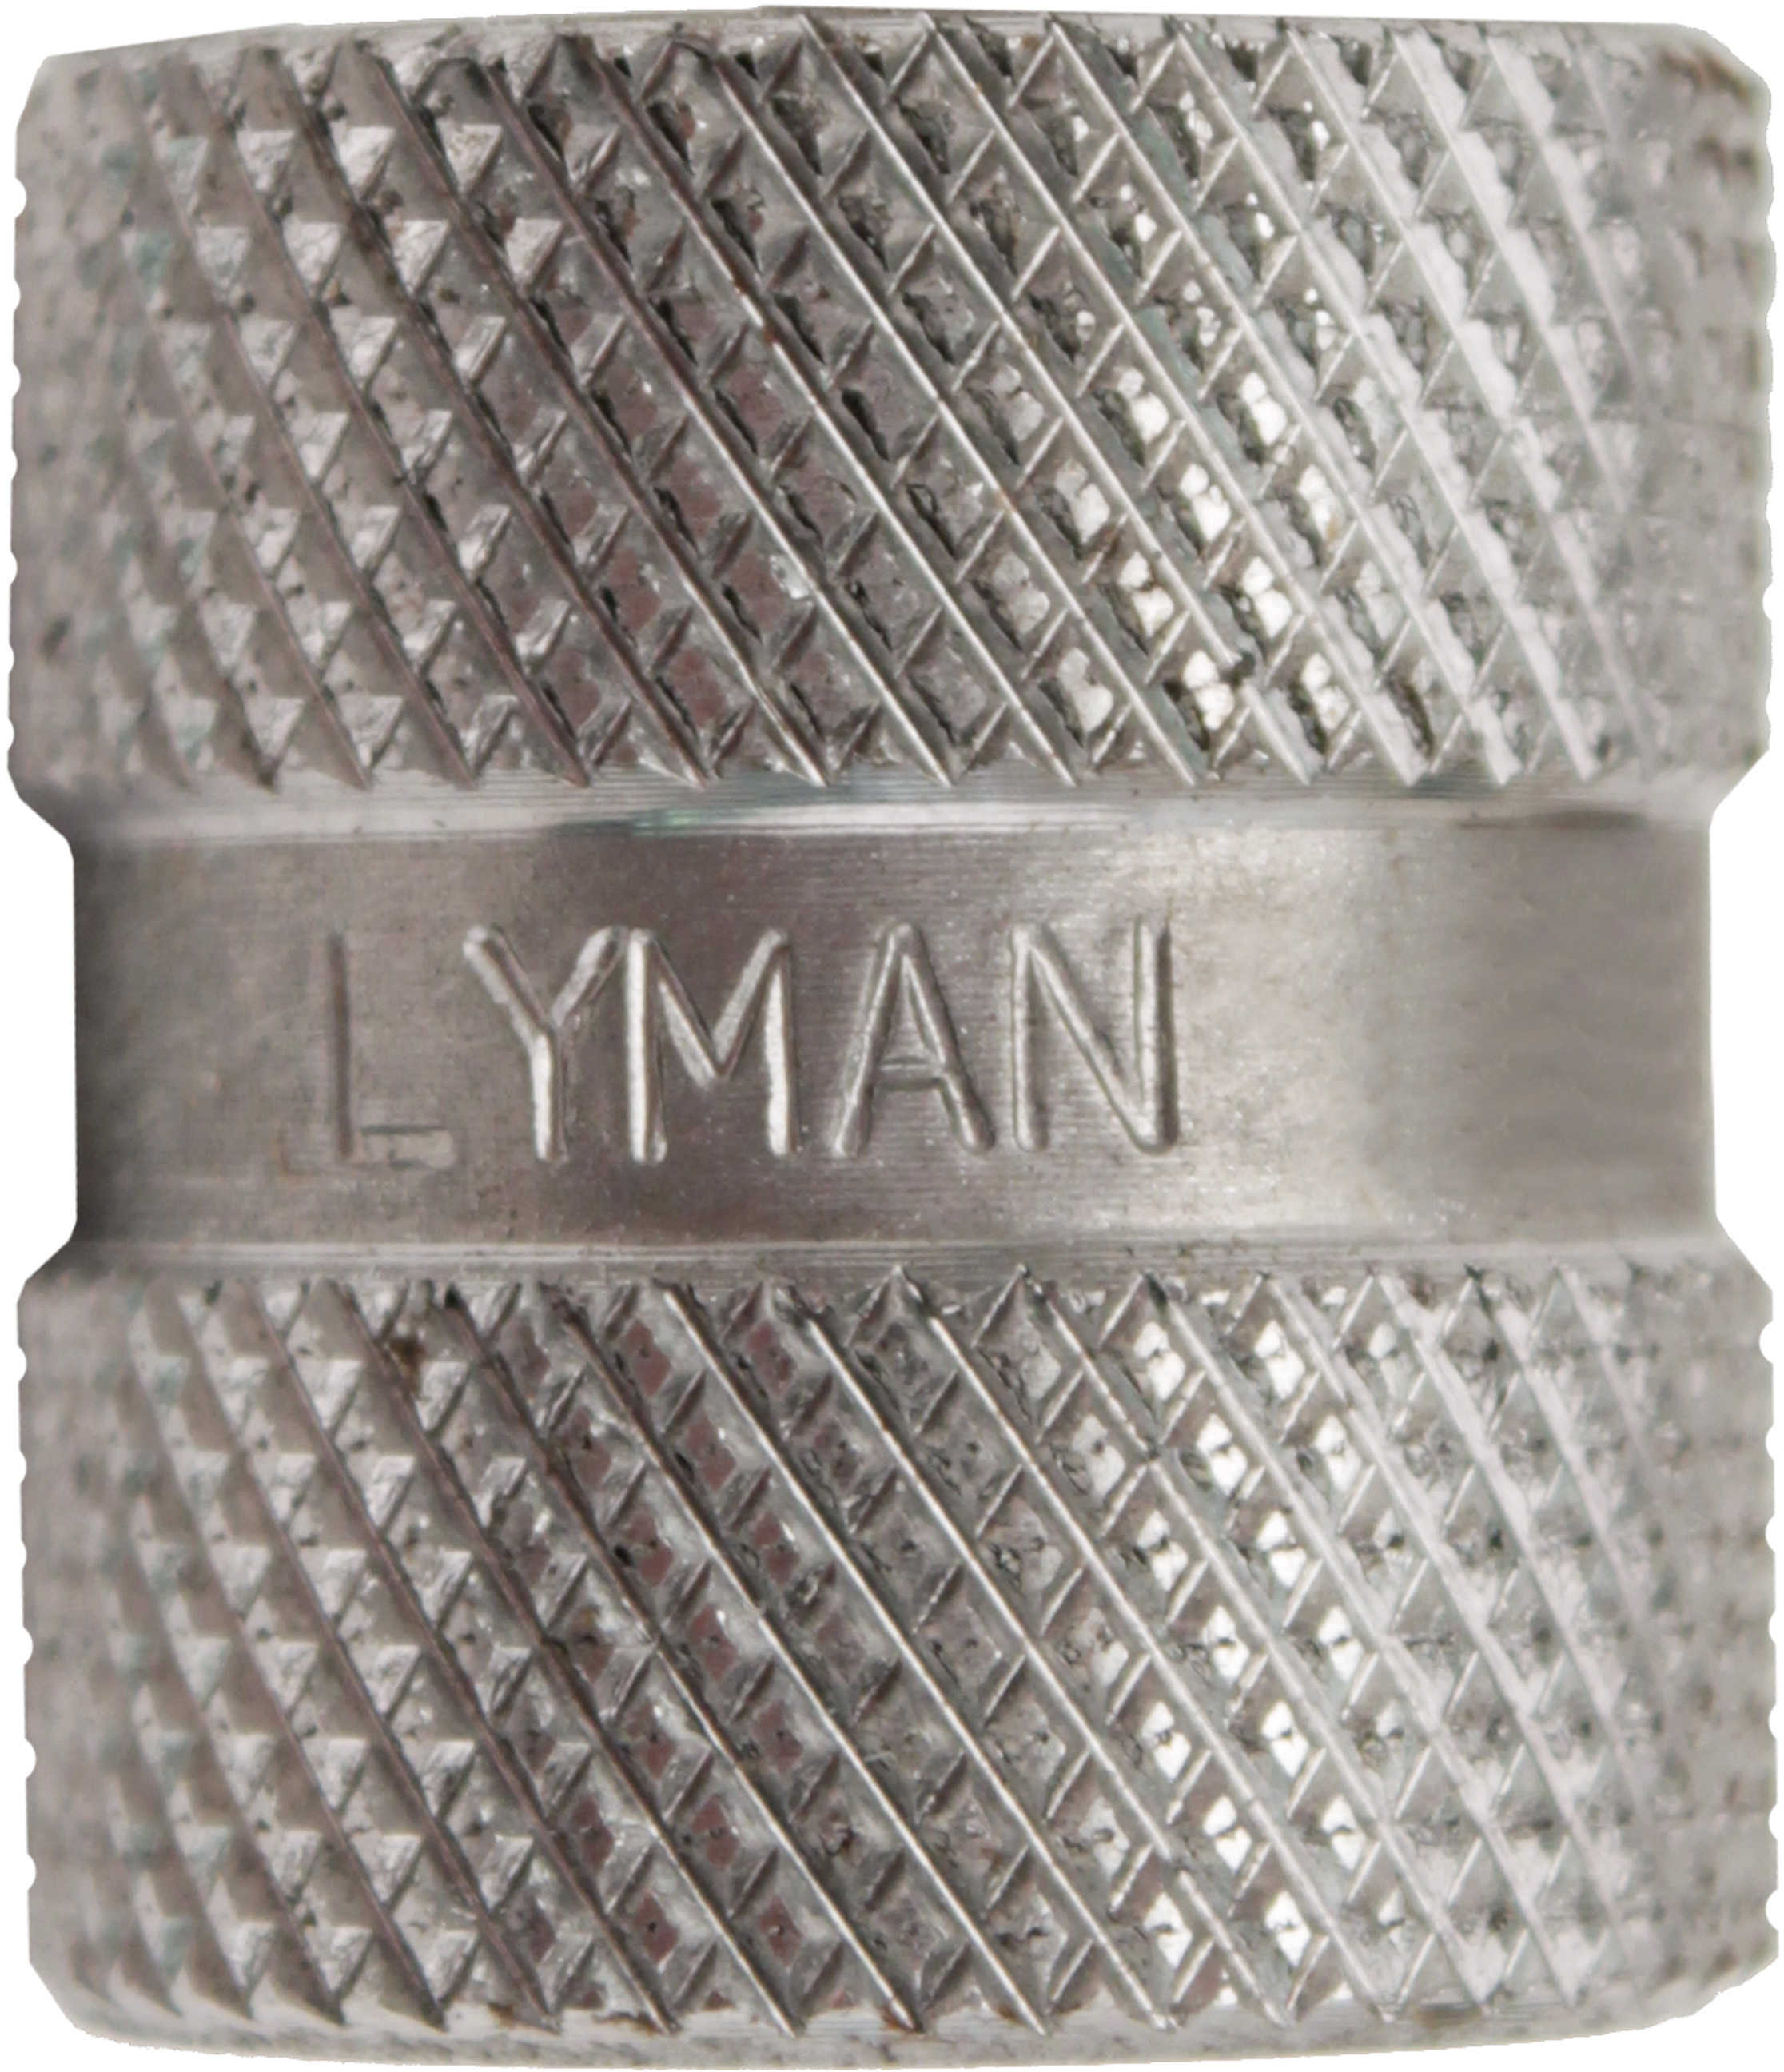 Lyman 45 A.C.P. Pistol Max Cartridge Gauge Md: 7832331